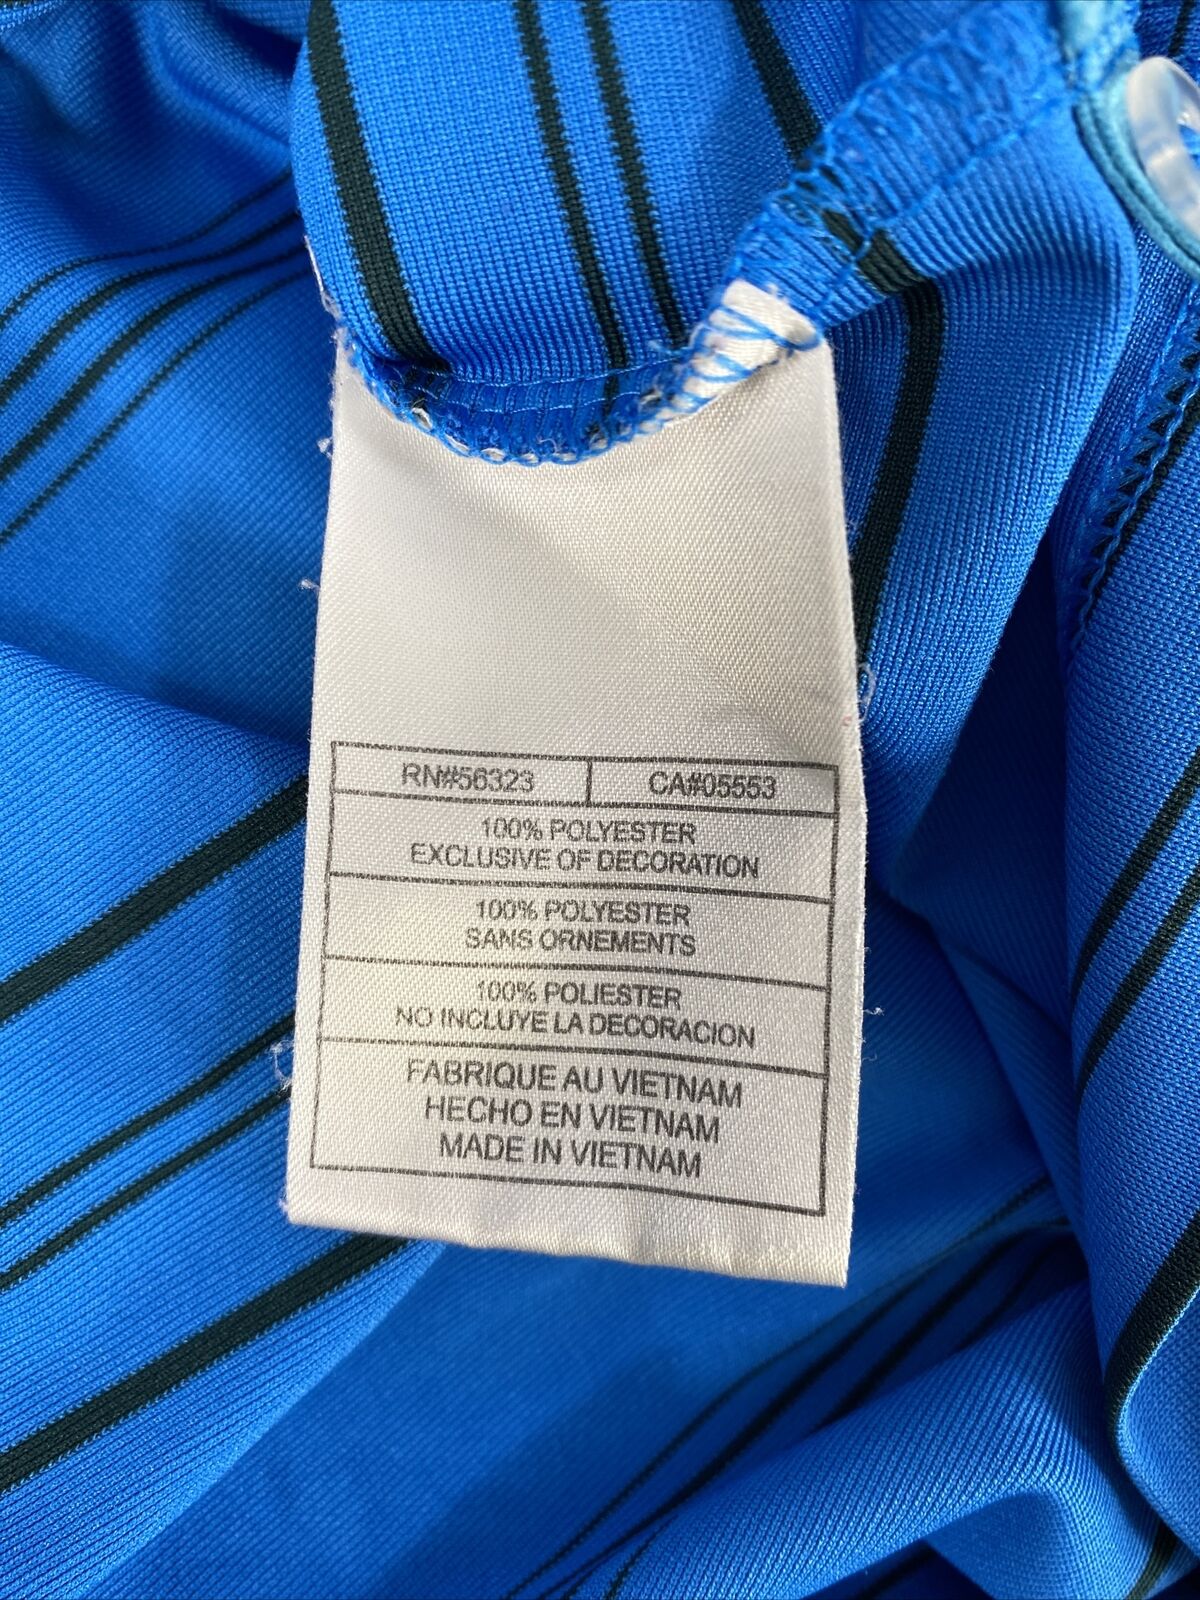 Nike Men's Blue Striped Short Sleeve FitDry Polyester Golf Polo Shirt - L